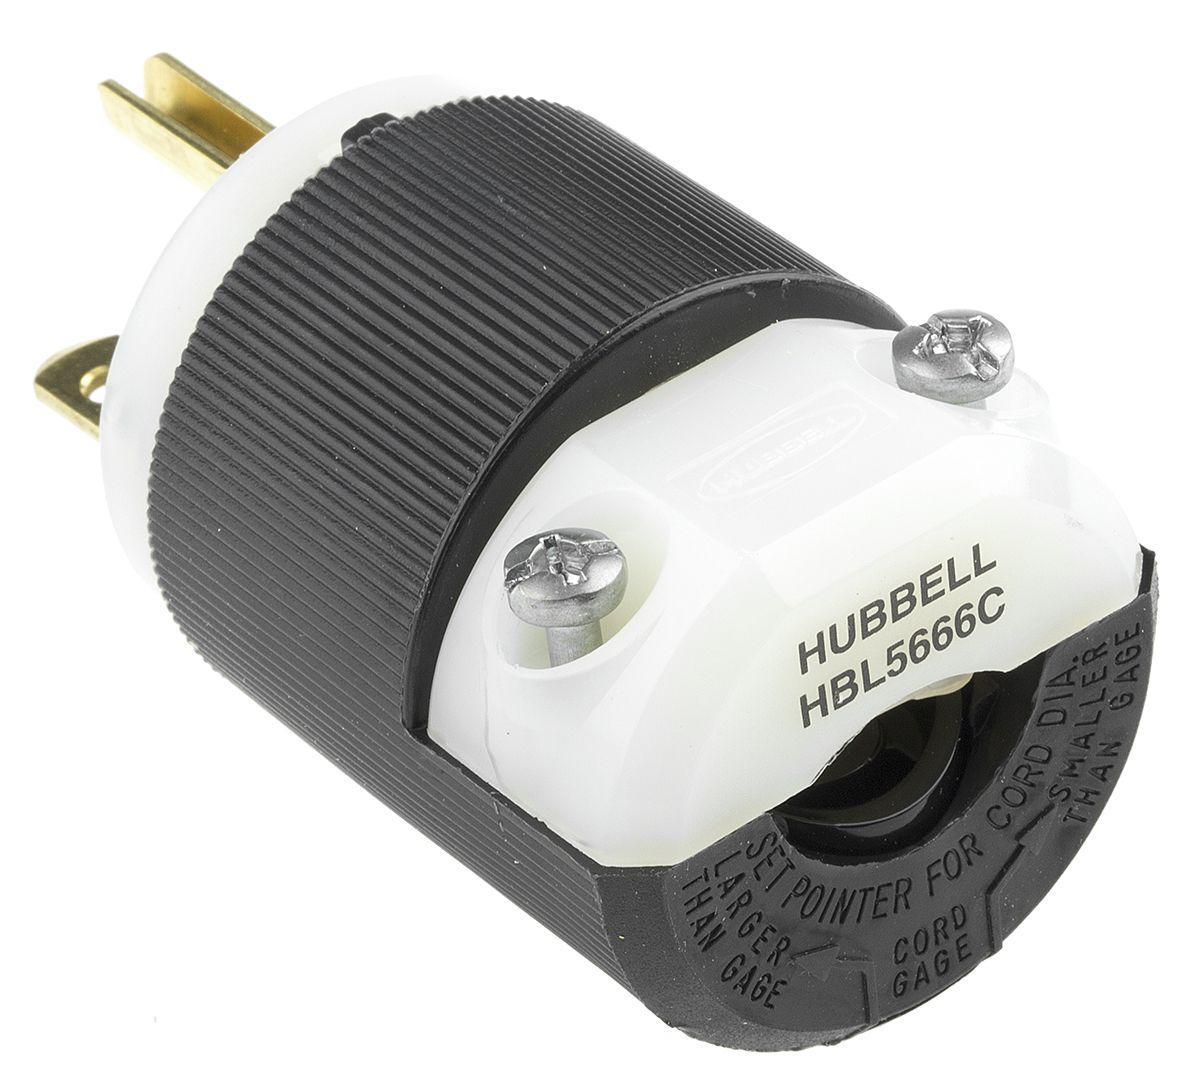 Hubbell USA Mains Plug, 15A, Cable Mount, 250 V